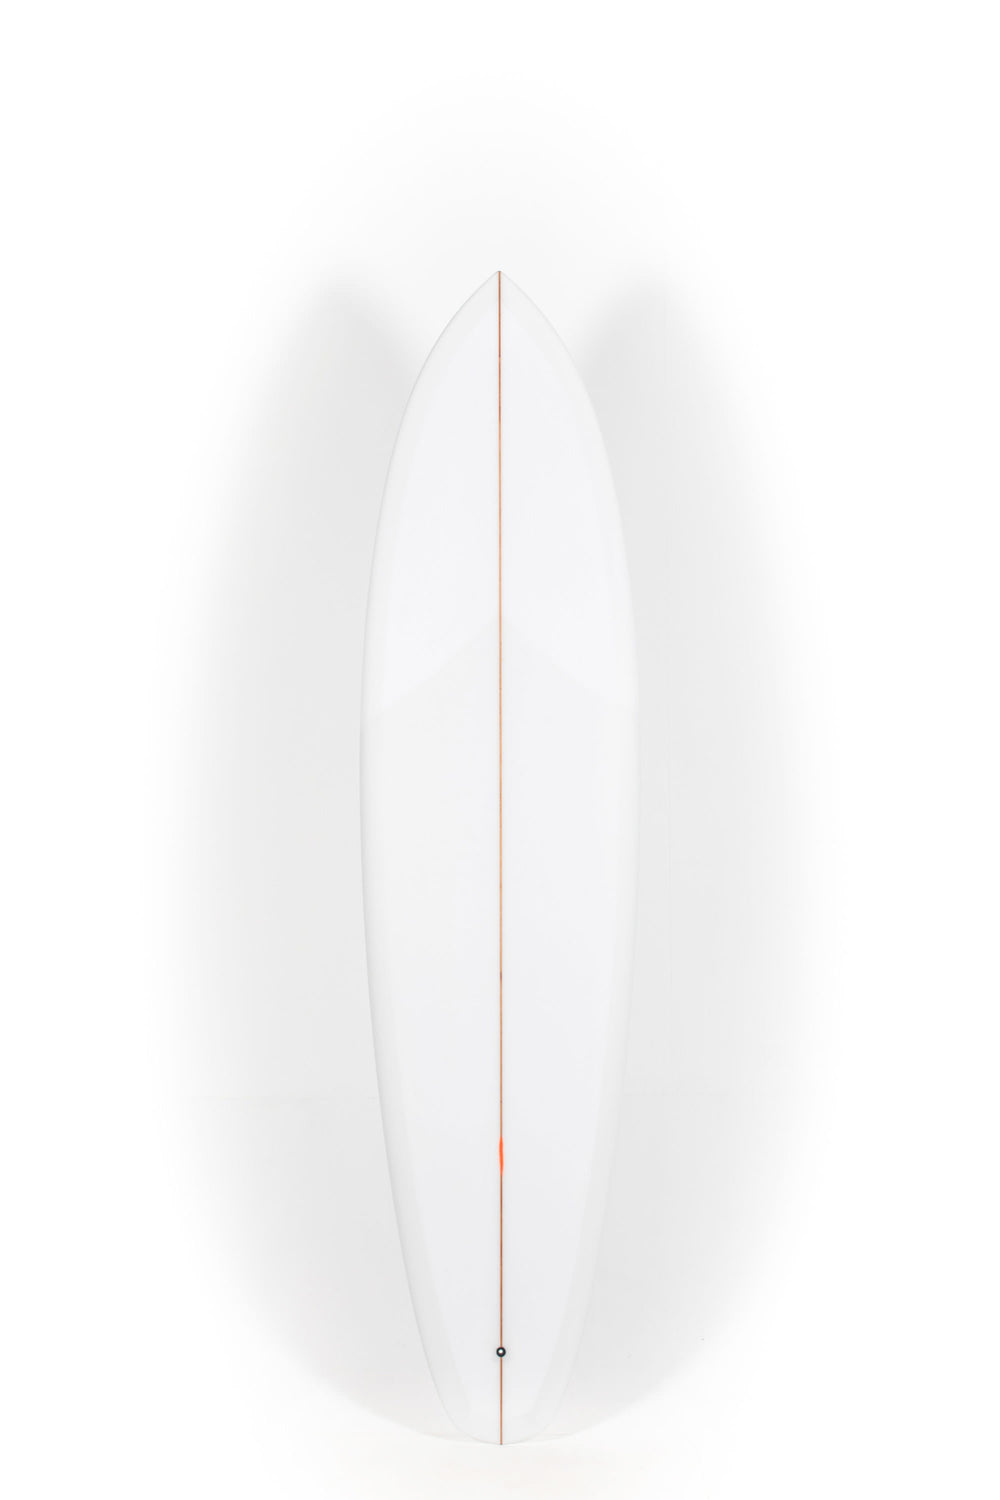 Pukas Surf shop - Christenson Surfboards - ULTRA TRACKER - 7'4